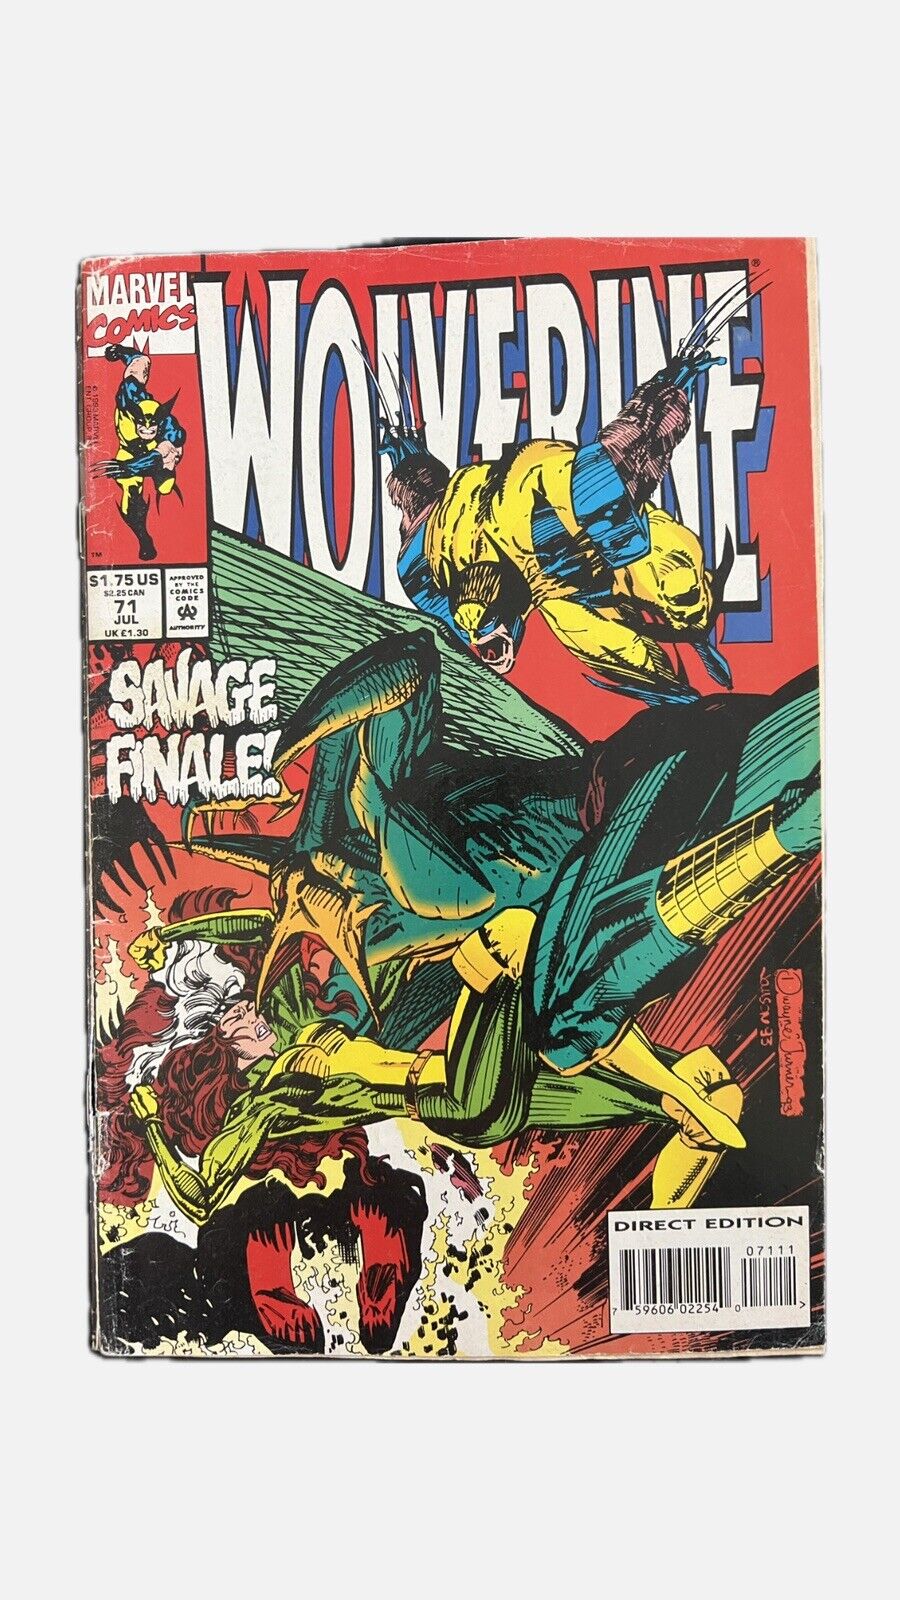 Wolverine #71 (July 1993). Savage Finale